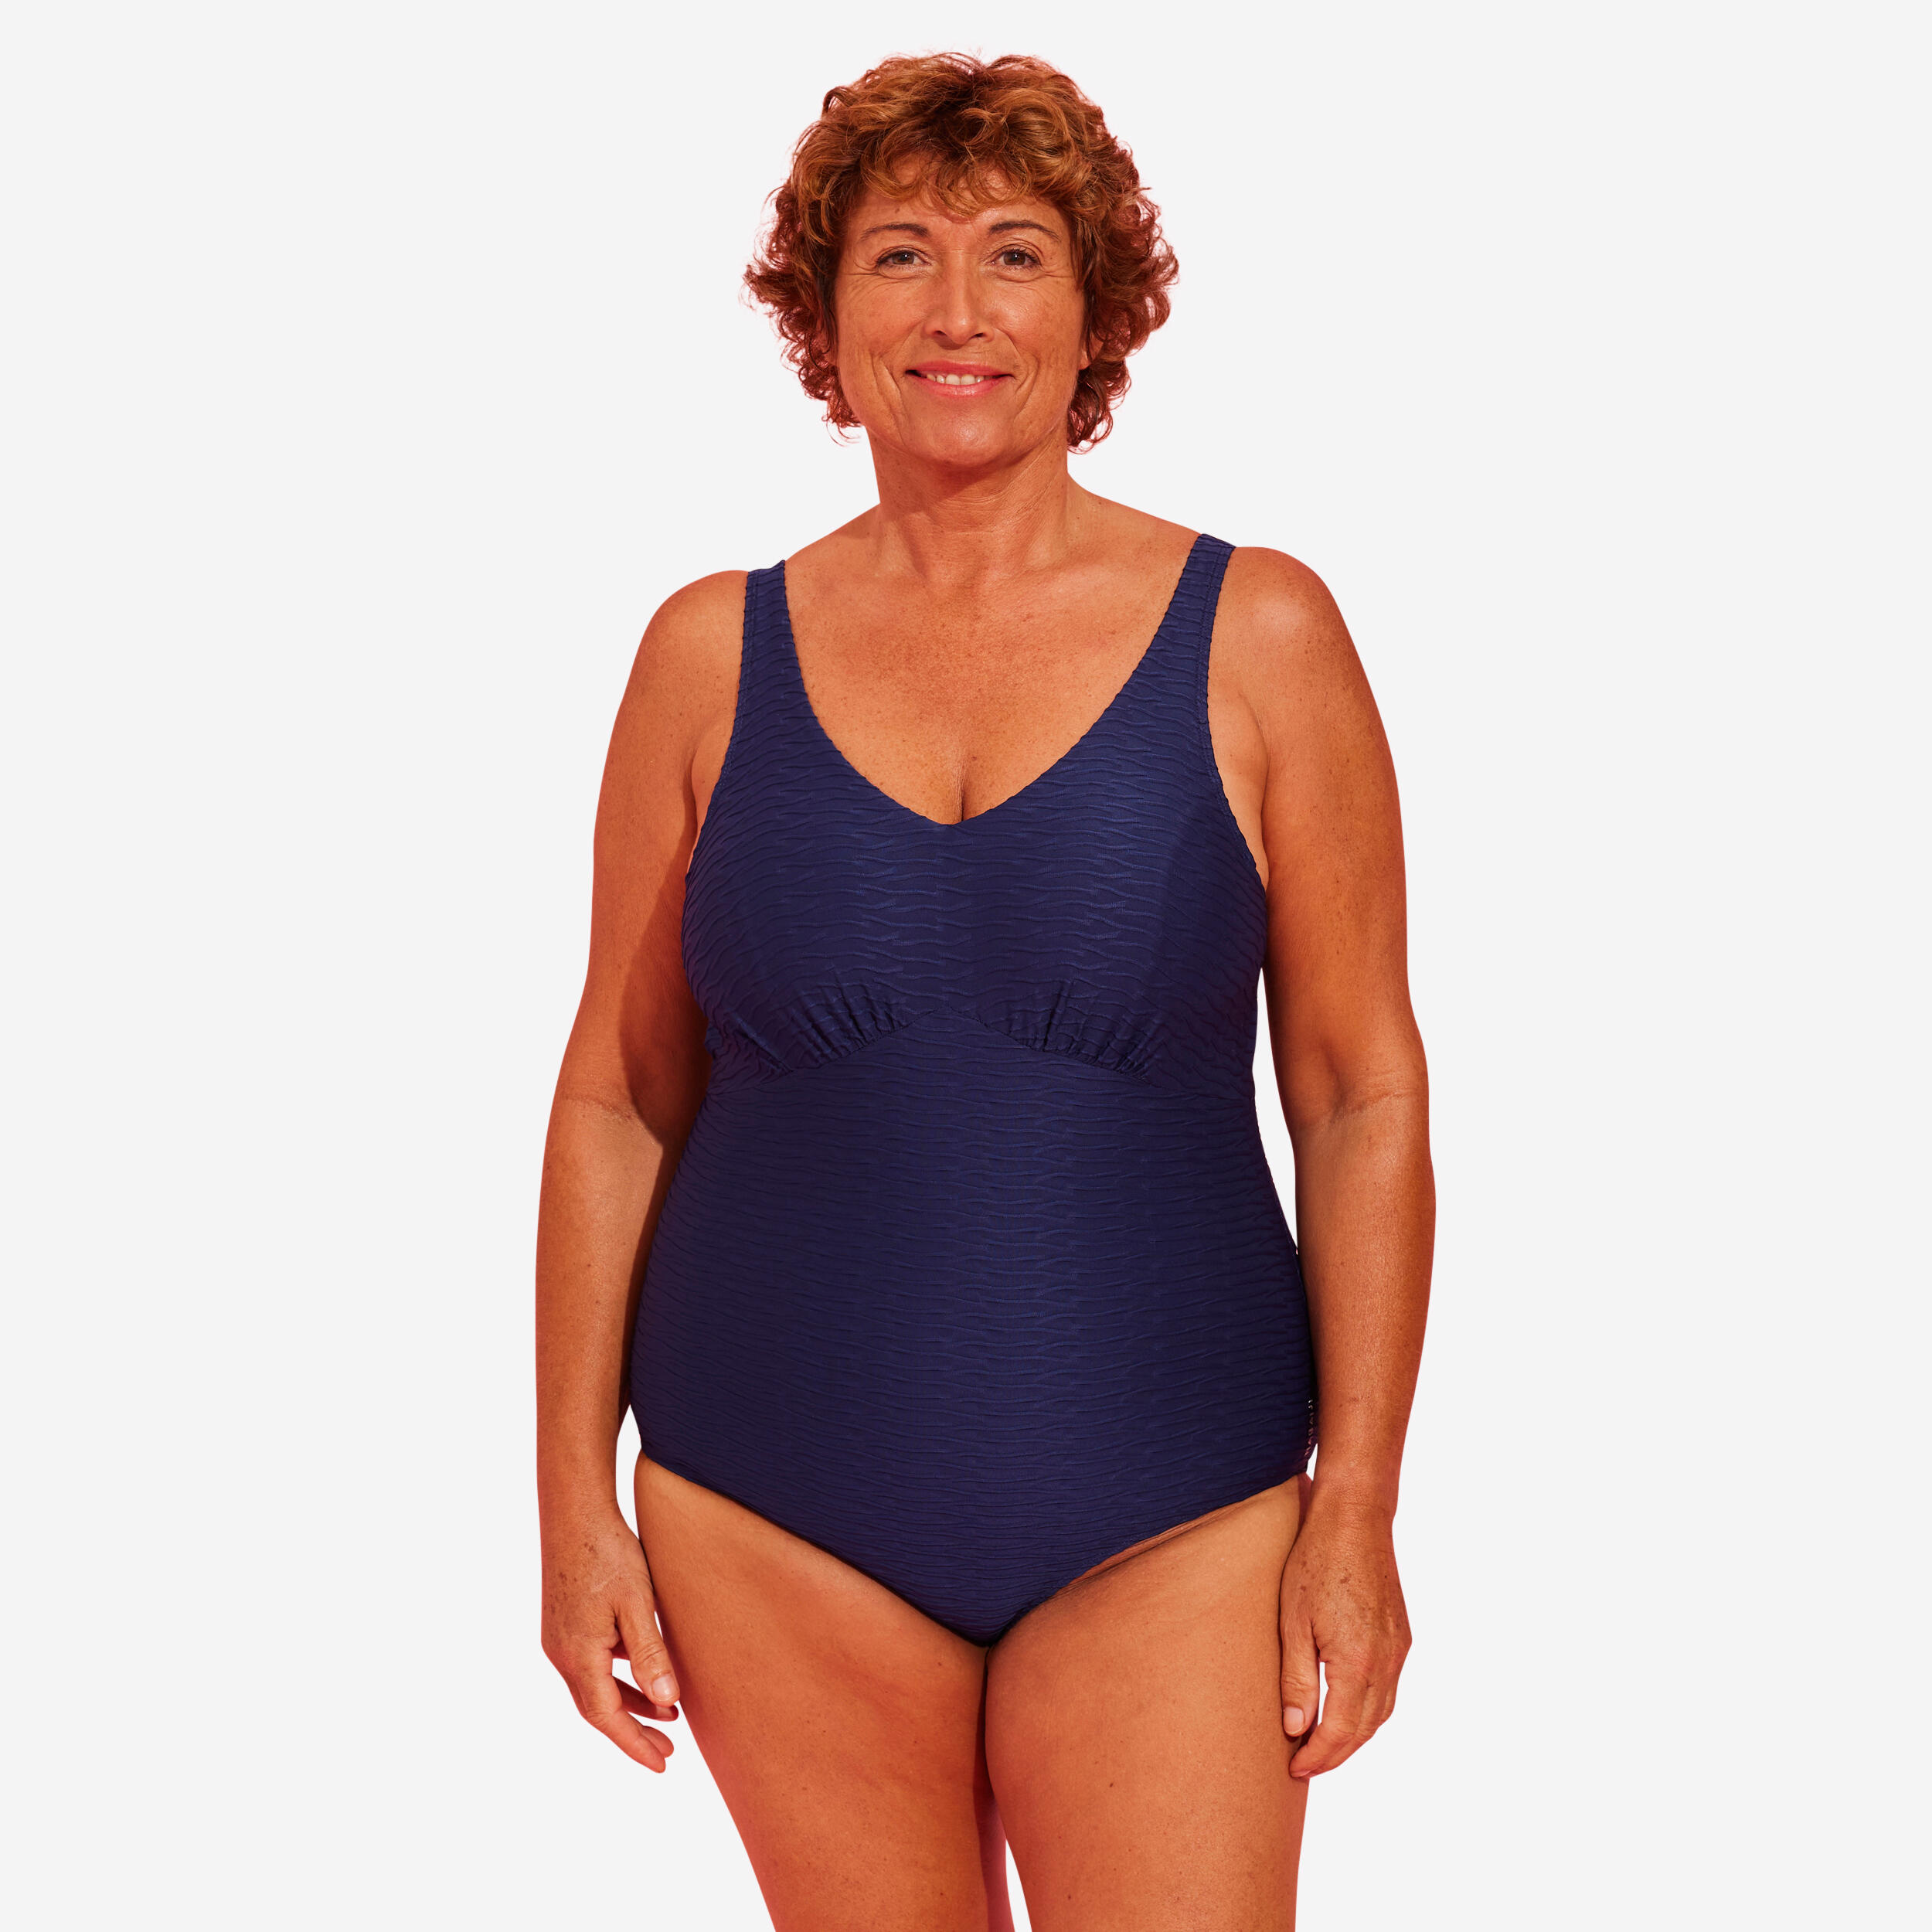 Women's Aquafit 1-piece Swimsuit Romi Salento - Dark Blue 1/16